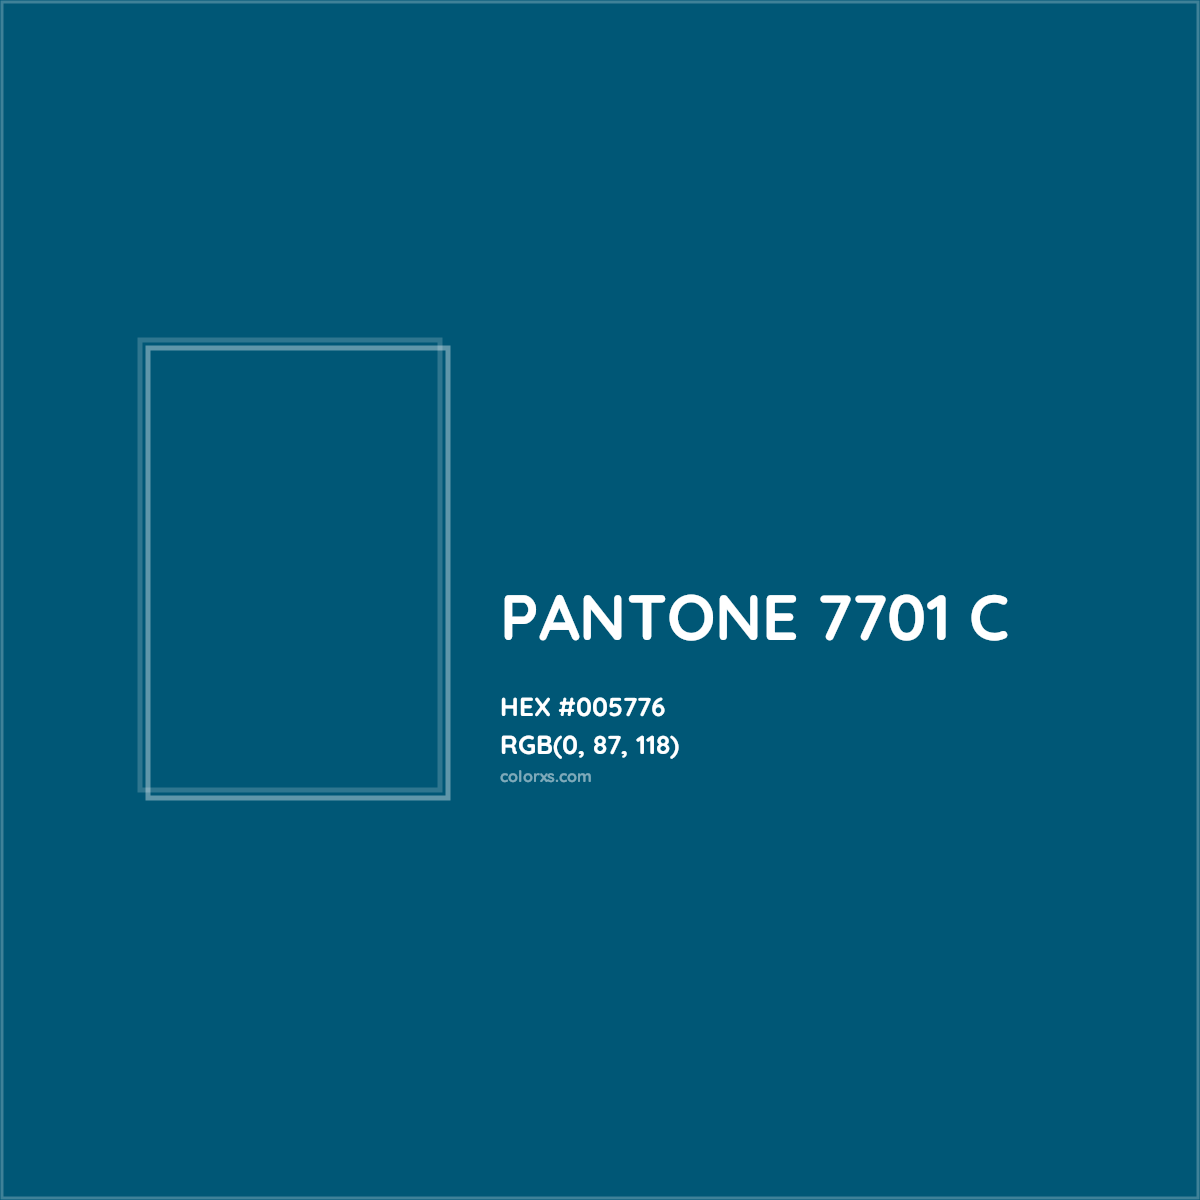 HEX #005776 PANTONE 7701 C CMS Pantone PMS - Color Code